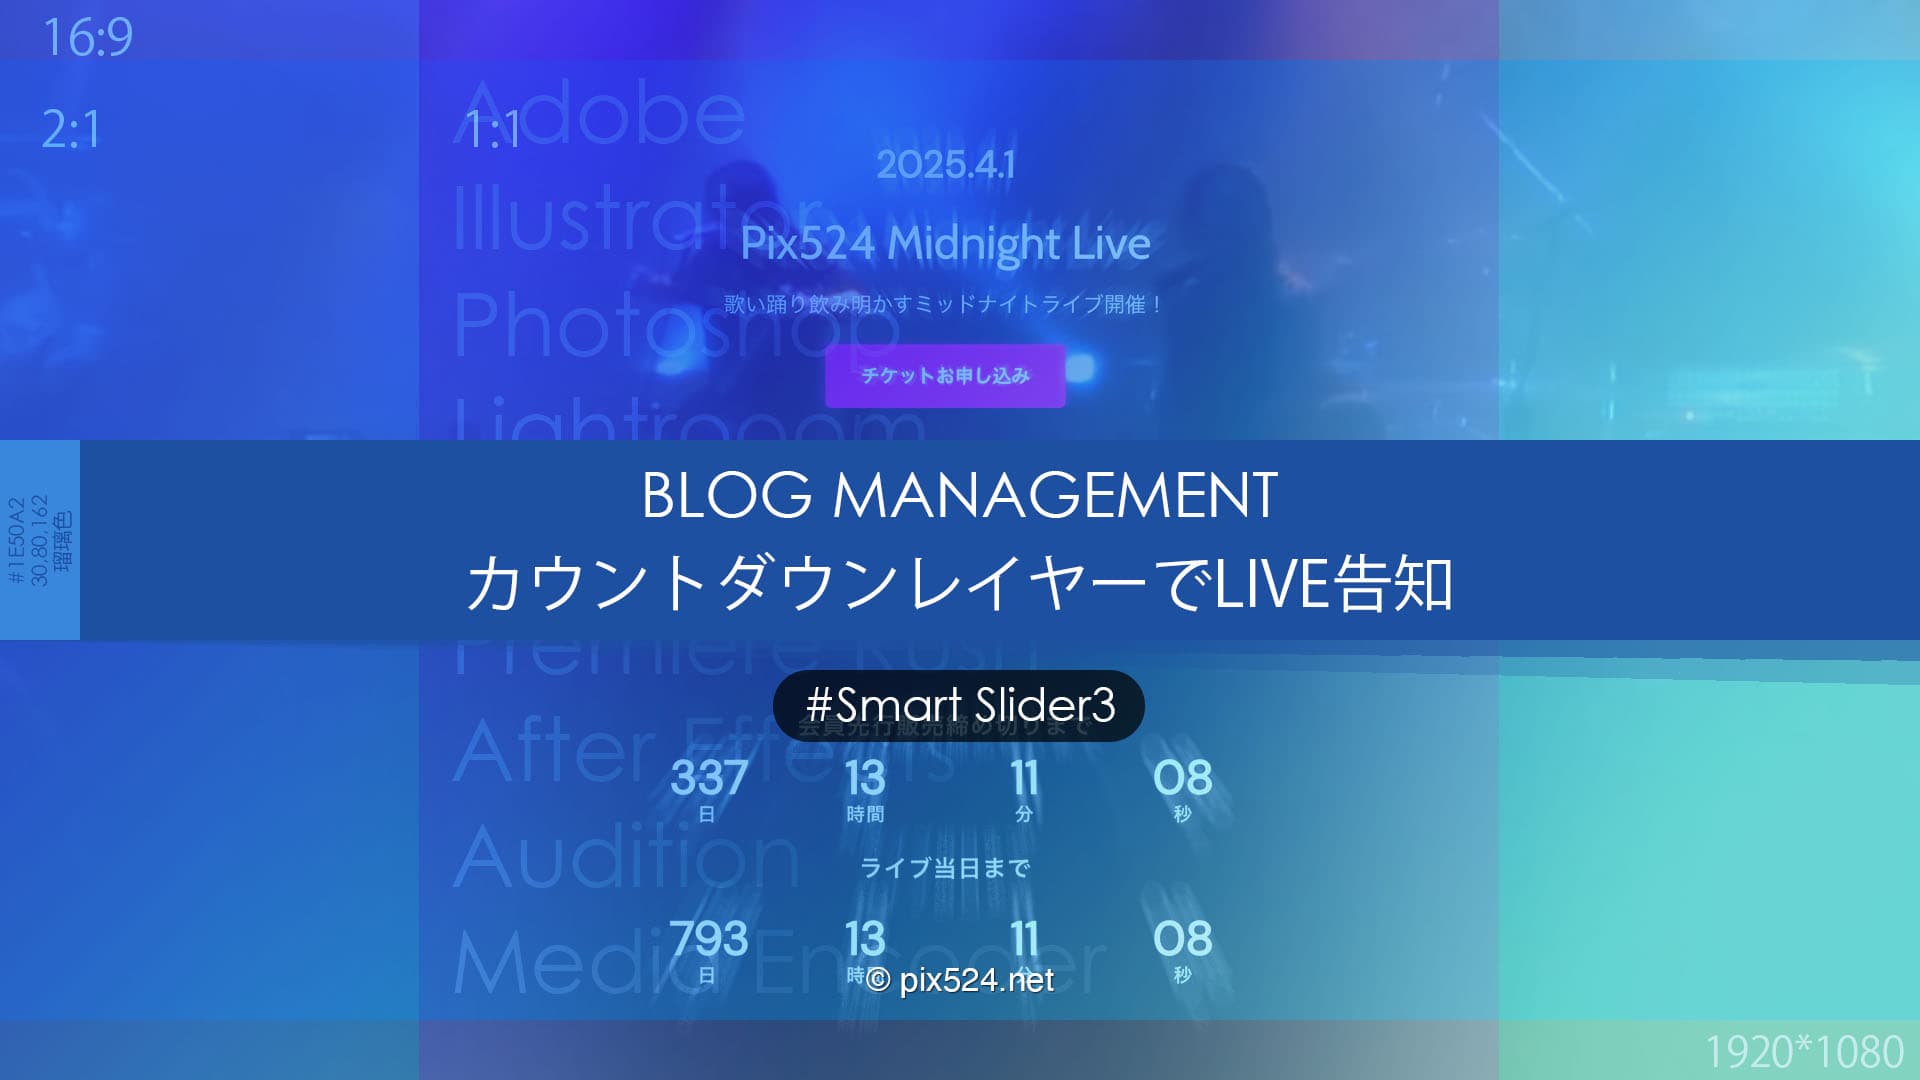 SmartSlider3のカウントダウンレイヤーでイベント案内を作成！動画で訴求する！